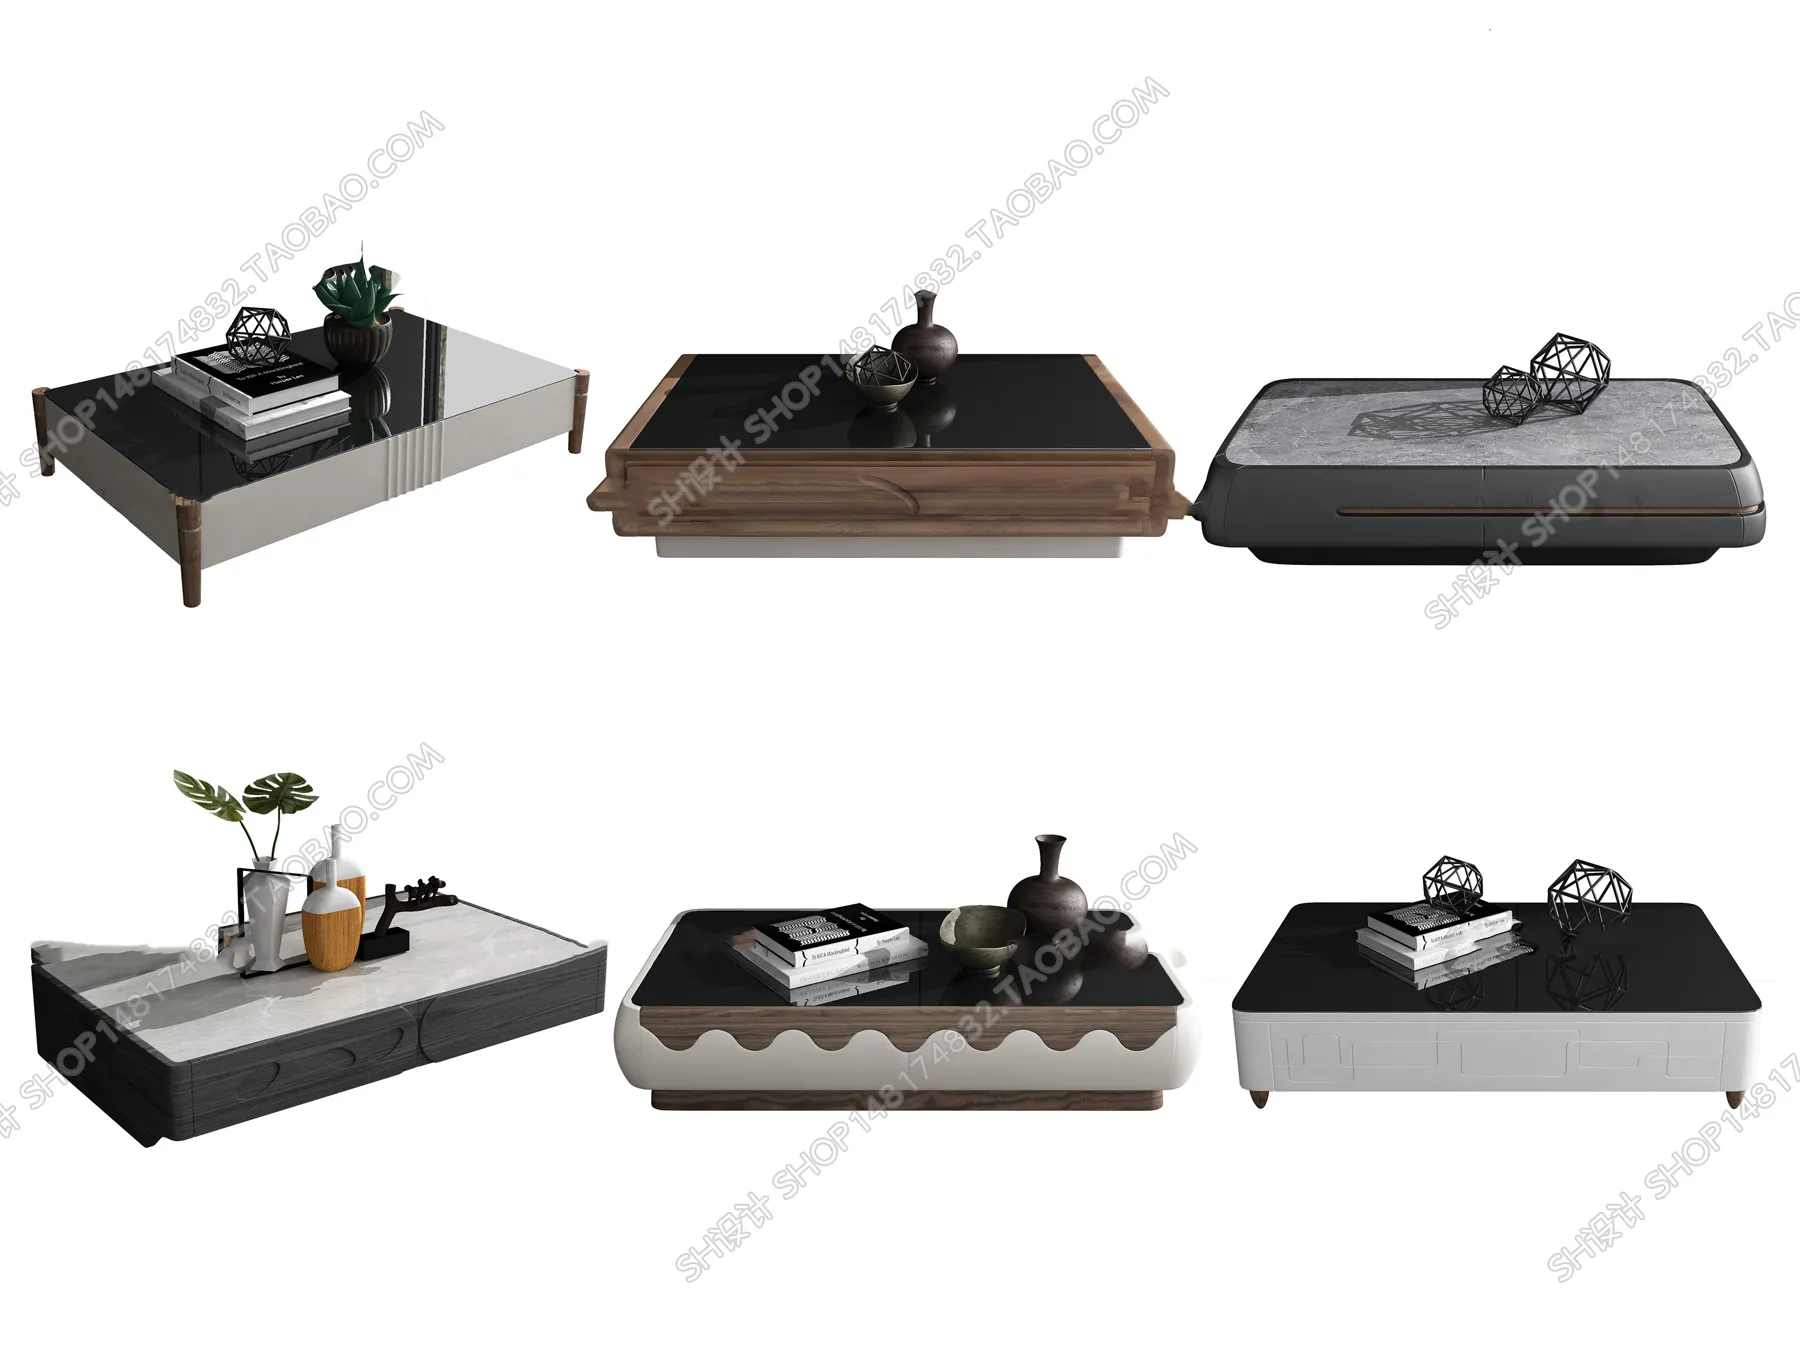 3DSKY MODELS – COFFEE TABLE 3D MODELS – 007